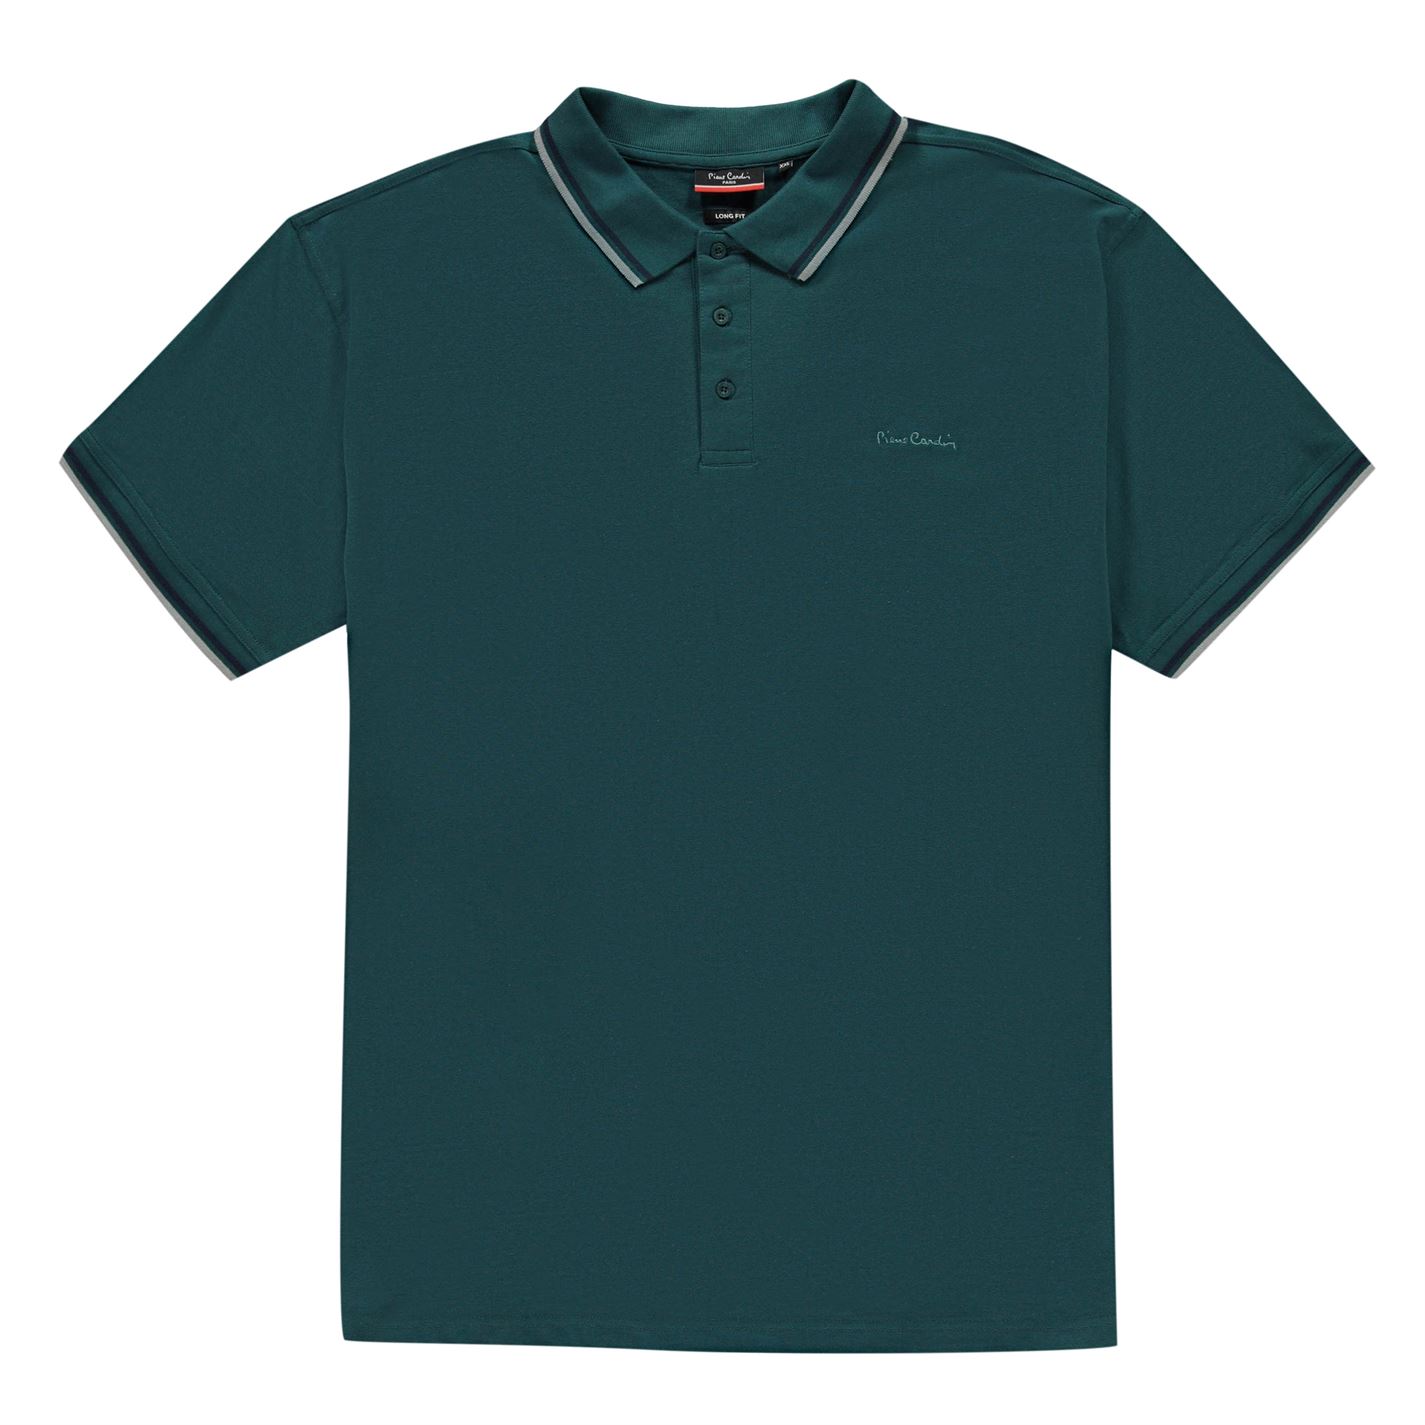 XL Tipped Polo Shirt Mens 3 button placketShort sleeves